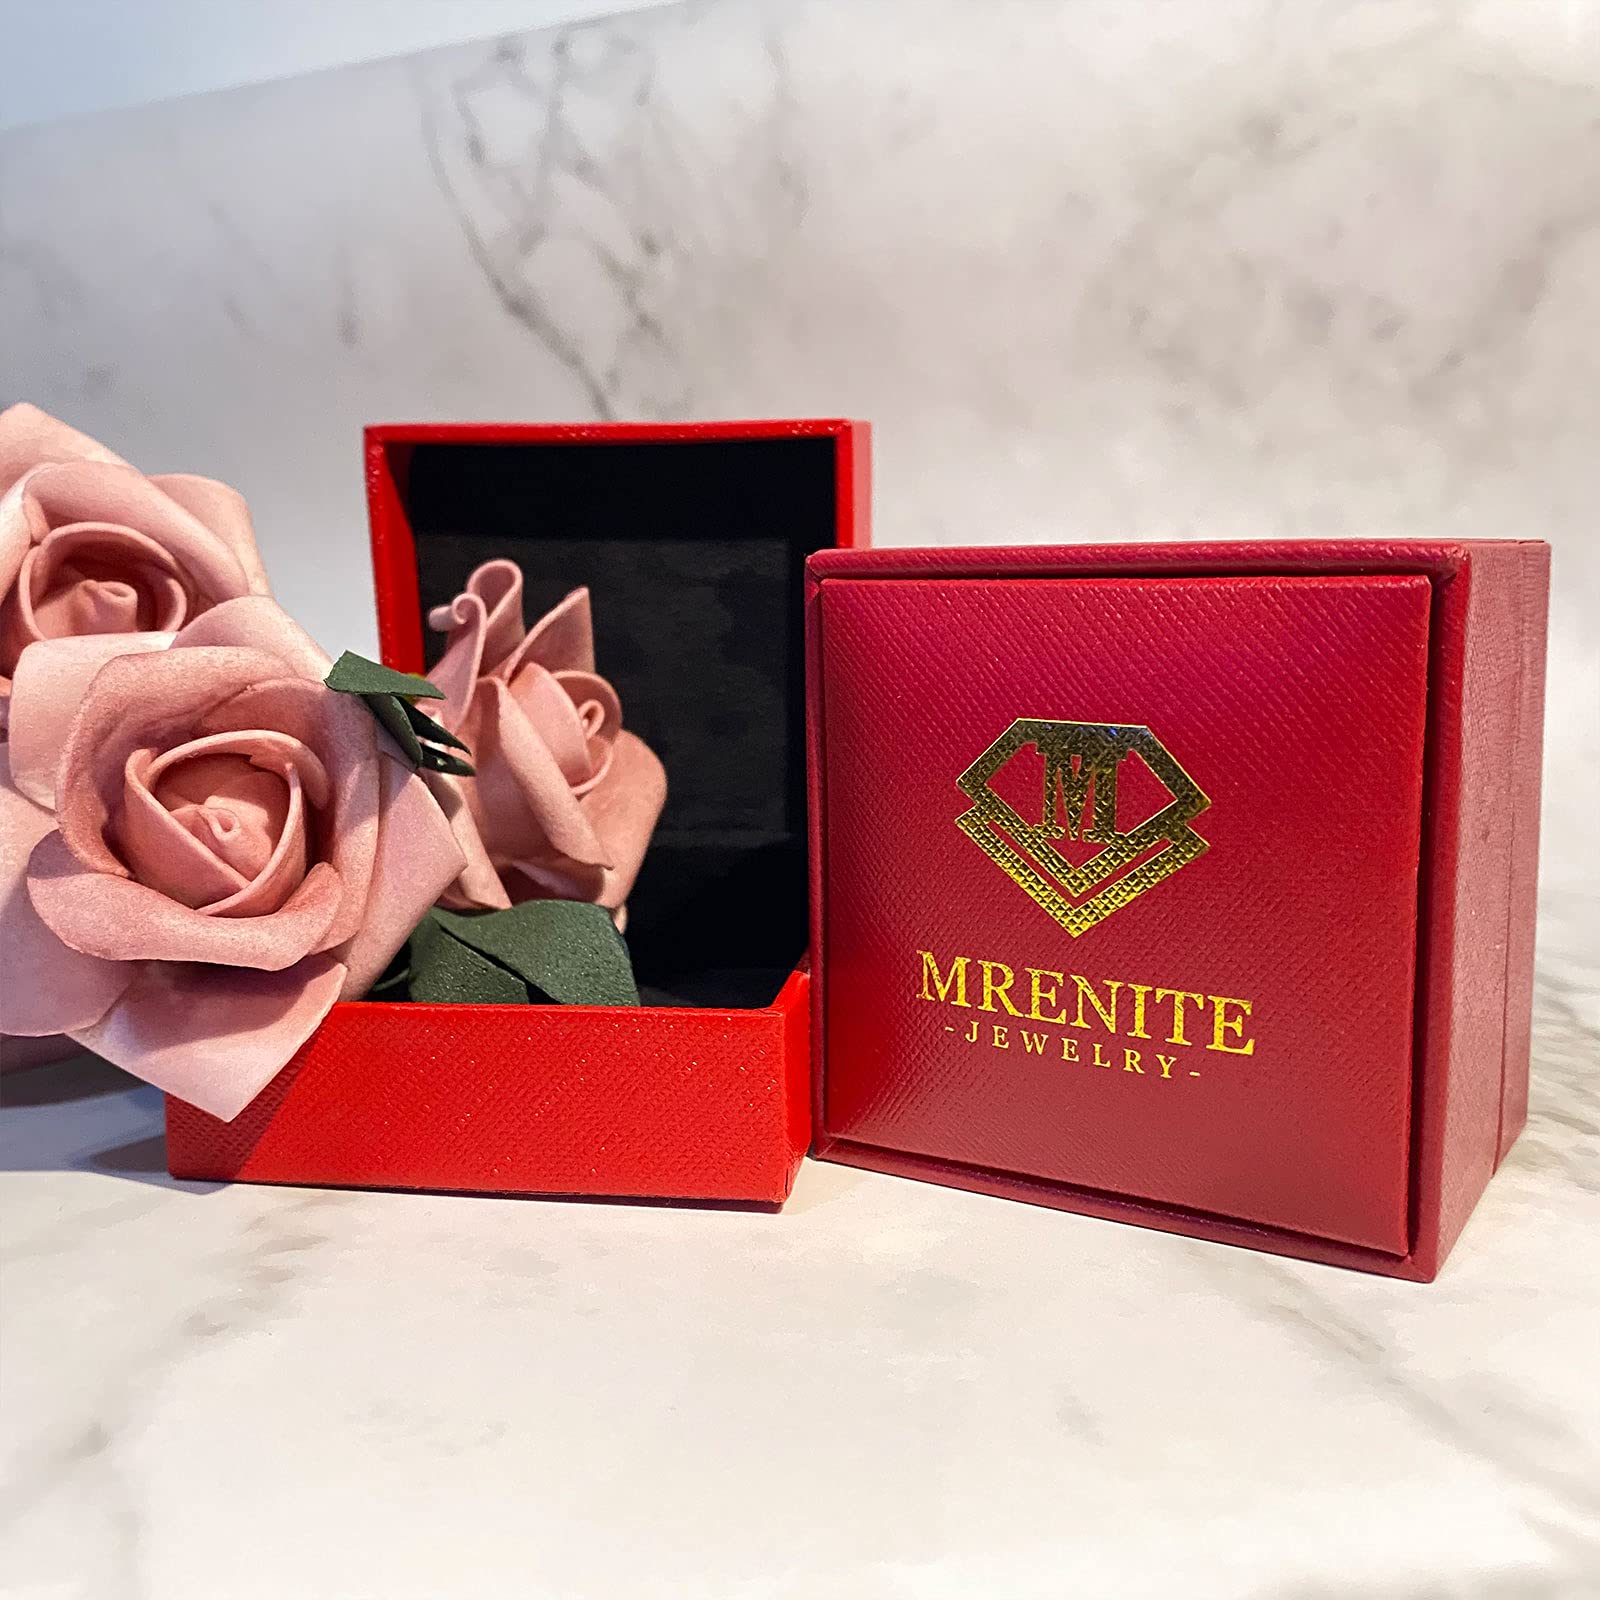 MRENITE 10K 14K 18K Gold Men's Moissanite Signet Rings Retro Design Size 5 to 15 Engrave Name Birthday Anniversary Luxury Jewelry Gifts for Him